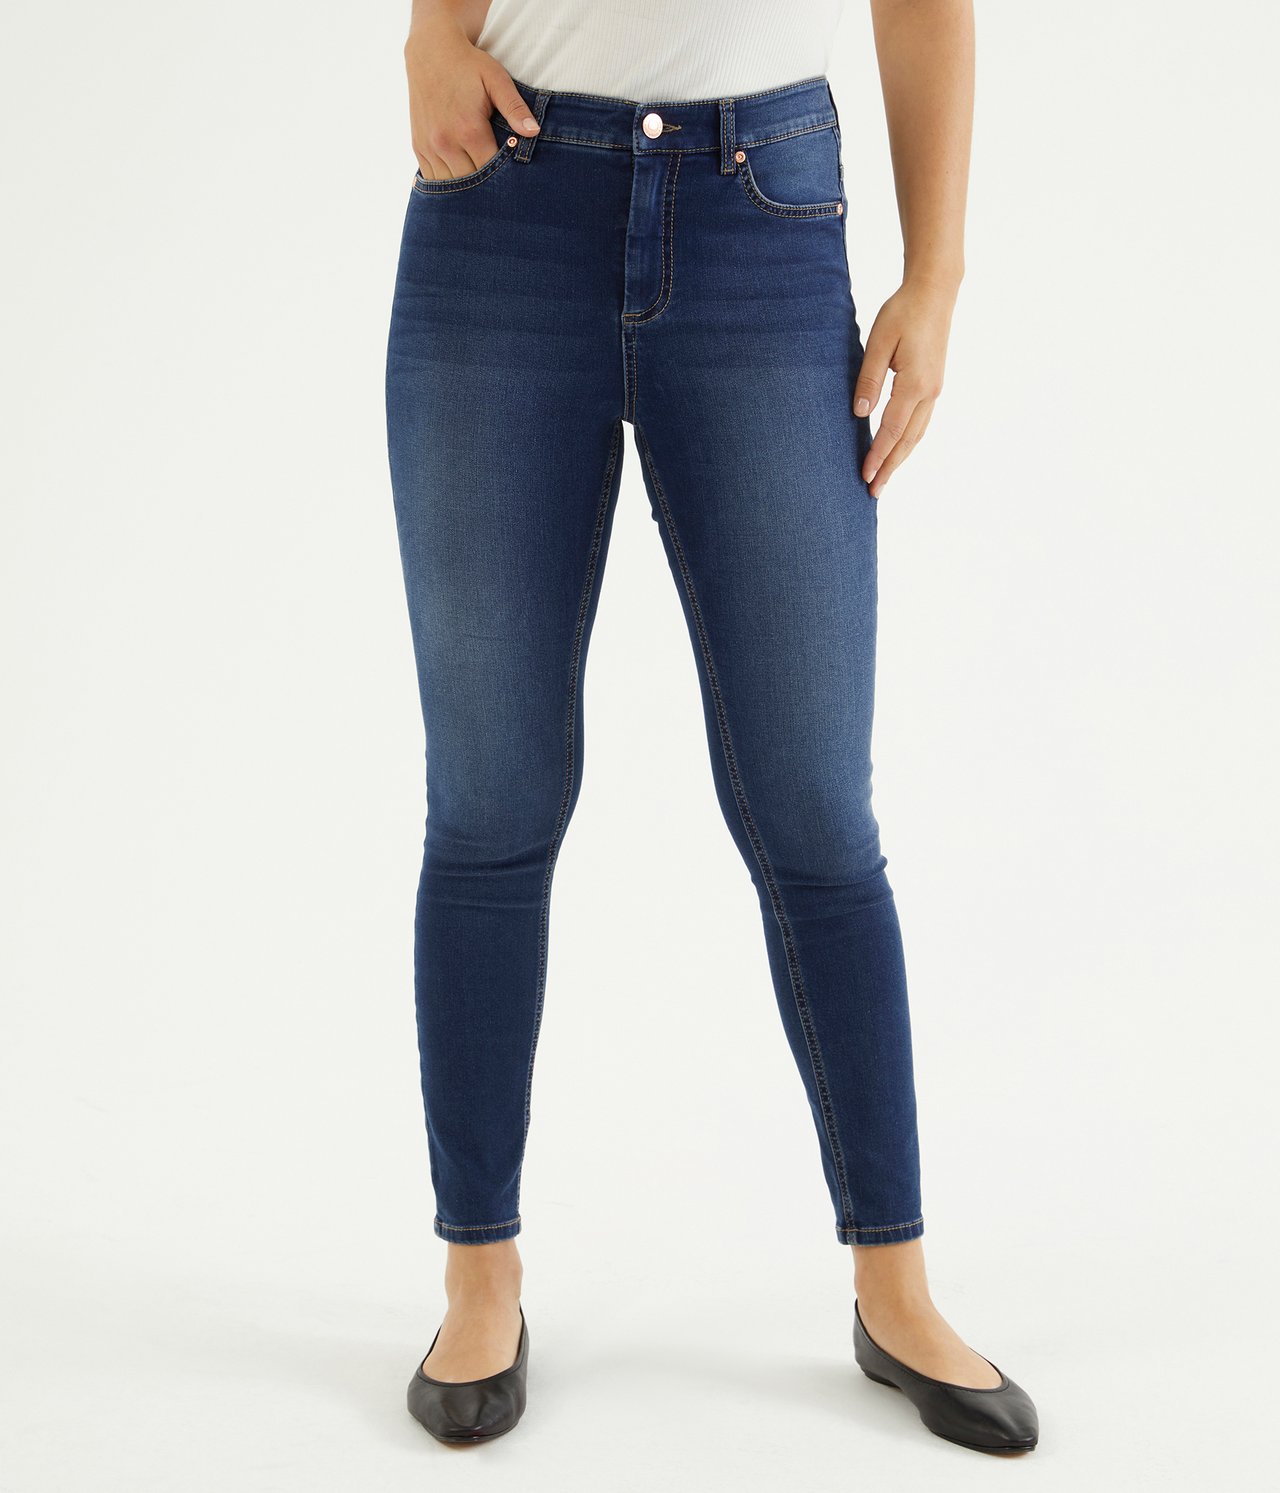 Super slim jeans short leg - Mörk denim - 3